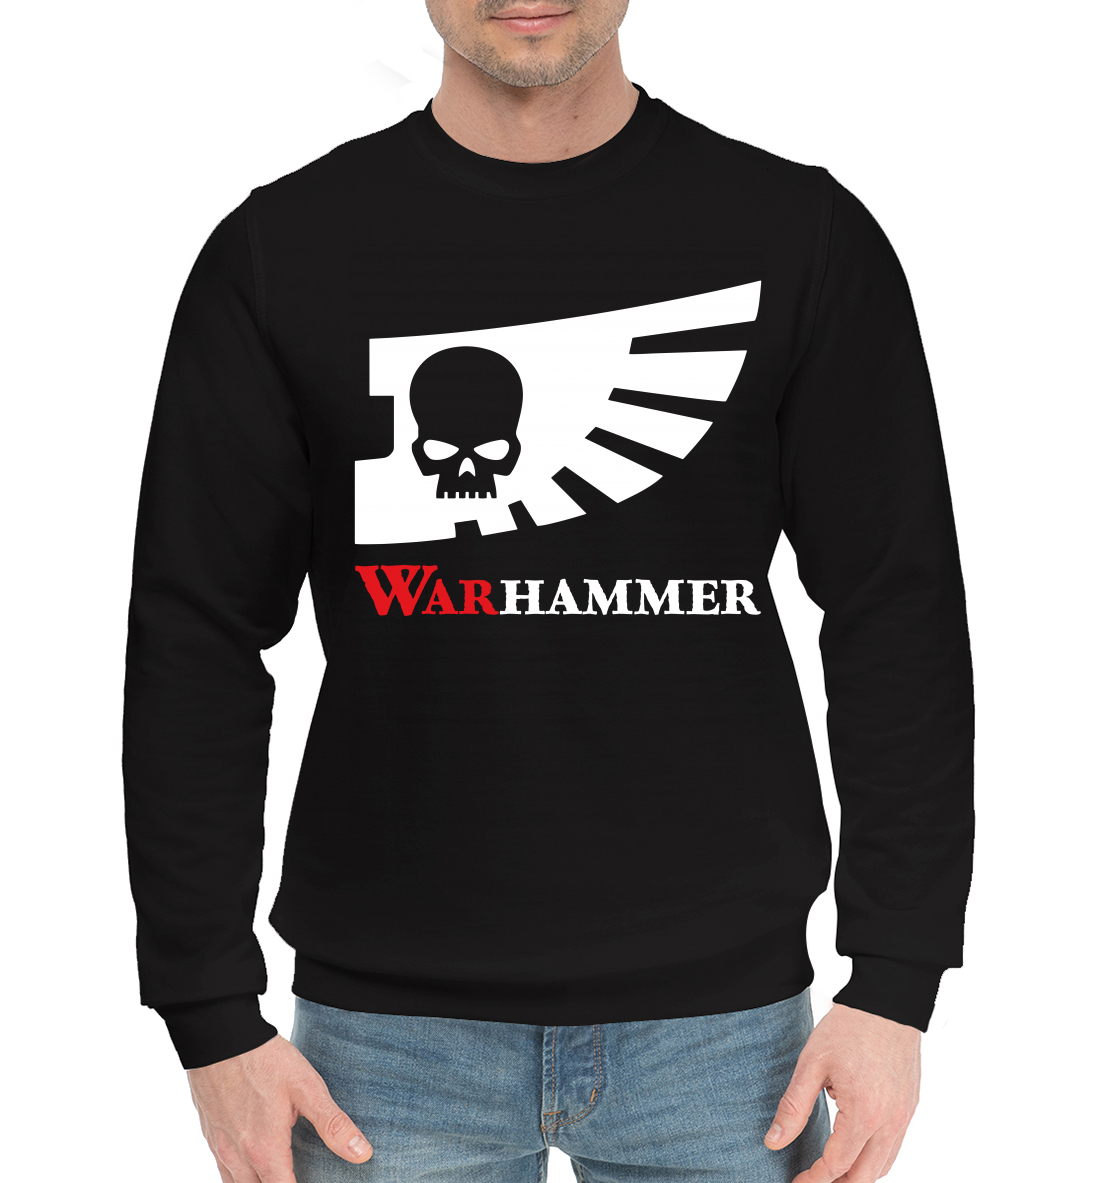 Мужской Хлопковый свитшот с принтом Warhammer, артикул WHR-789781-hsw-2mp